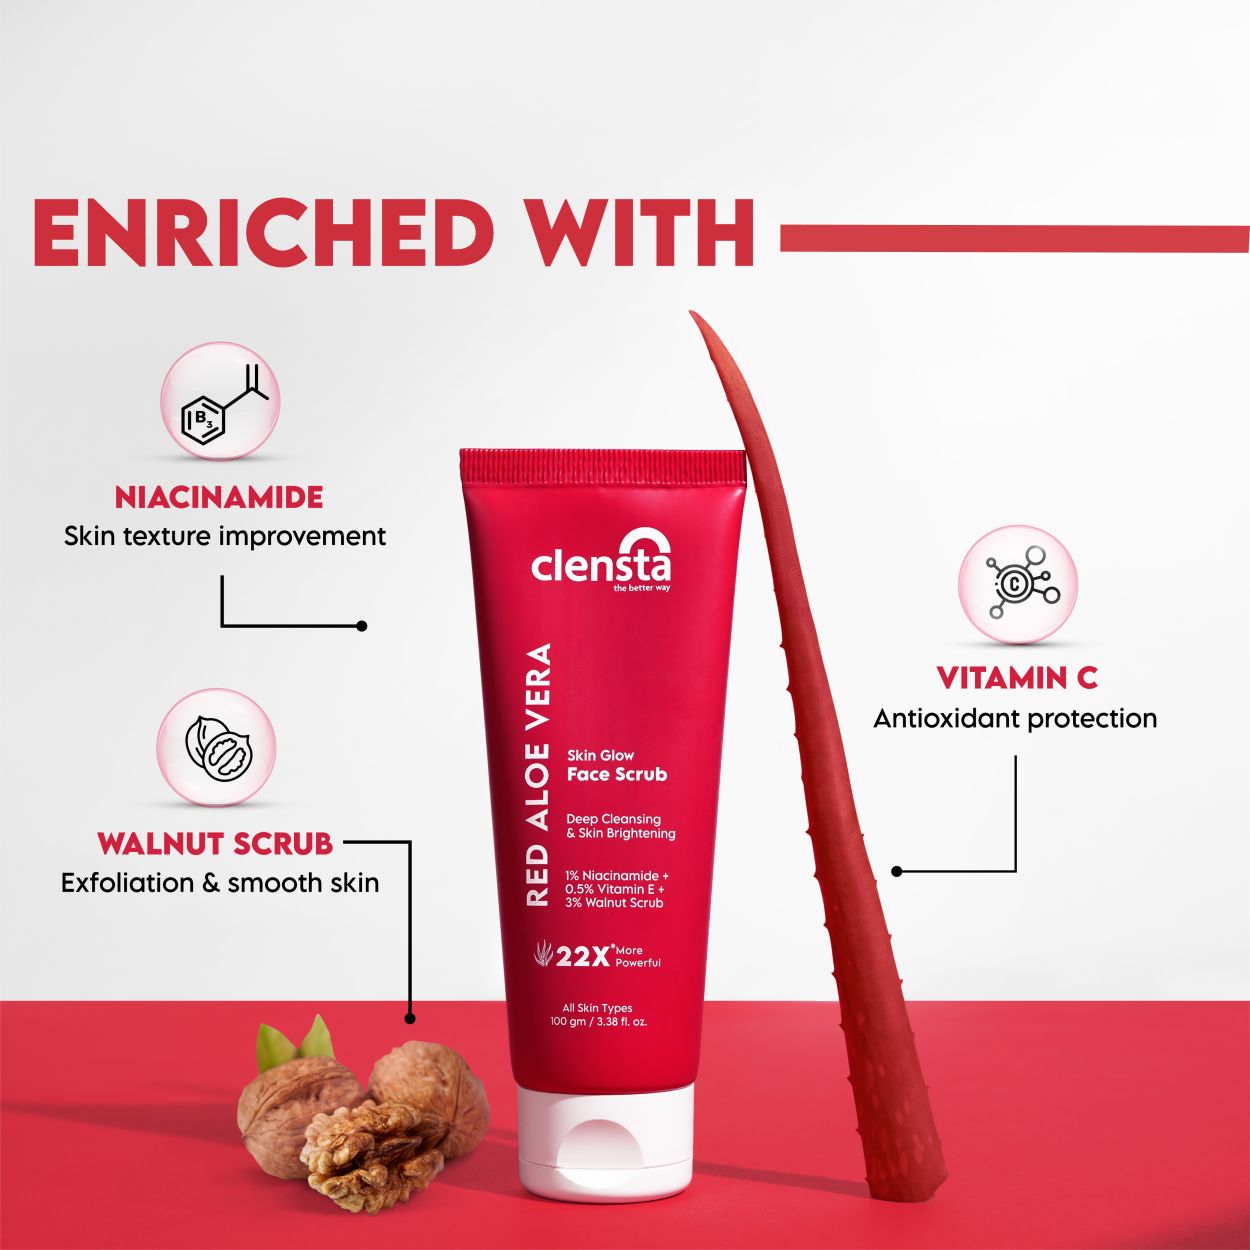 Red Aloe Vera Skin Glow Face Scrub With 1% Niacinamide, 0.5% Vitamin E & 3% Walnut Scrub For Deep Cleansing & Skin Brightening